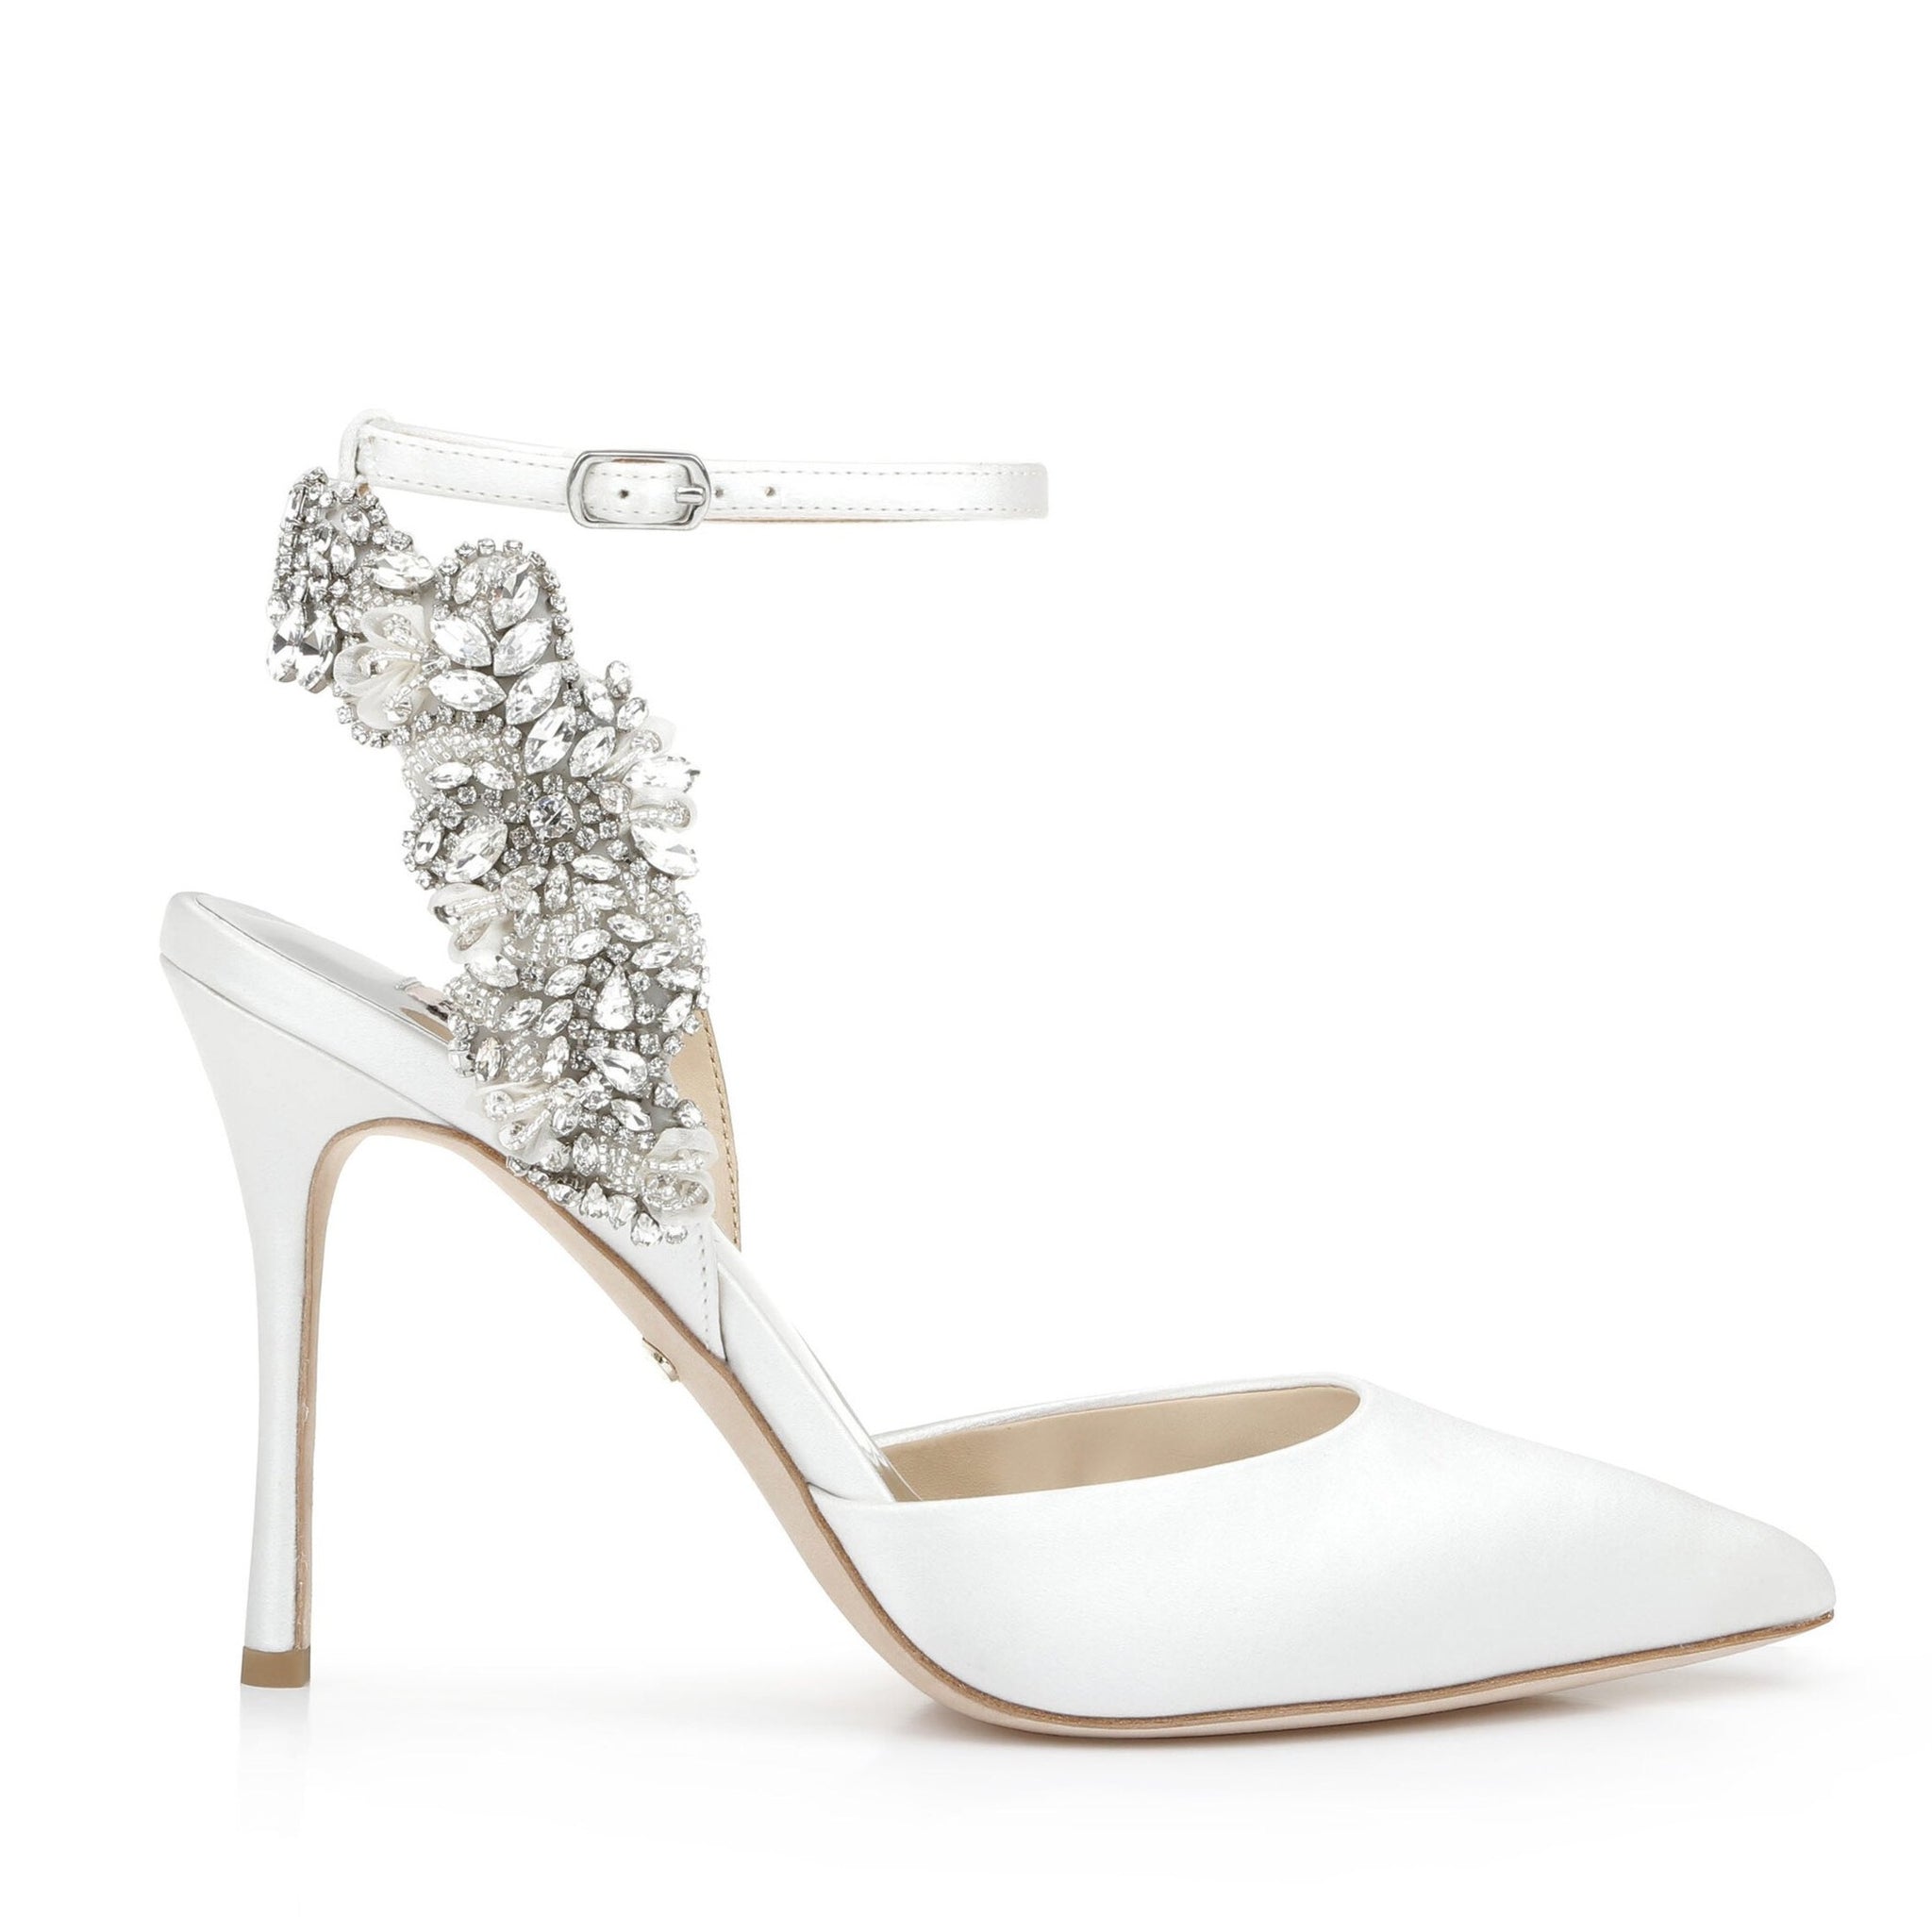 Badgley Mischka Blanca Pointed Wedding Shoes 